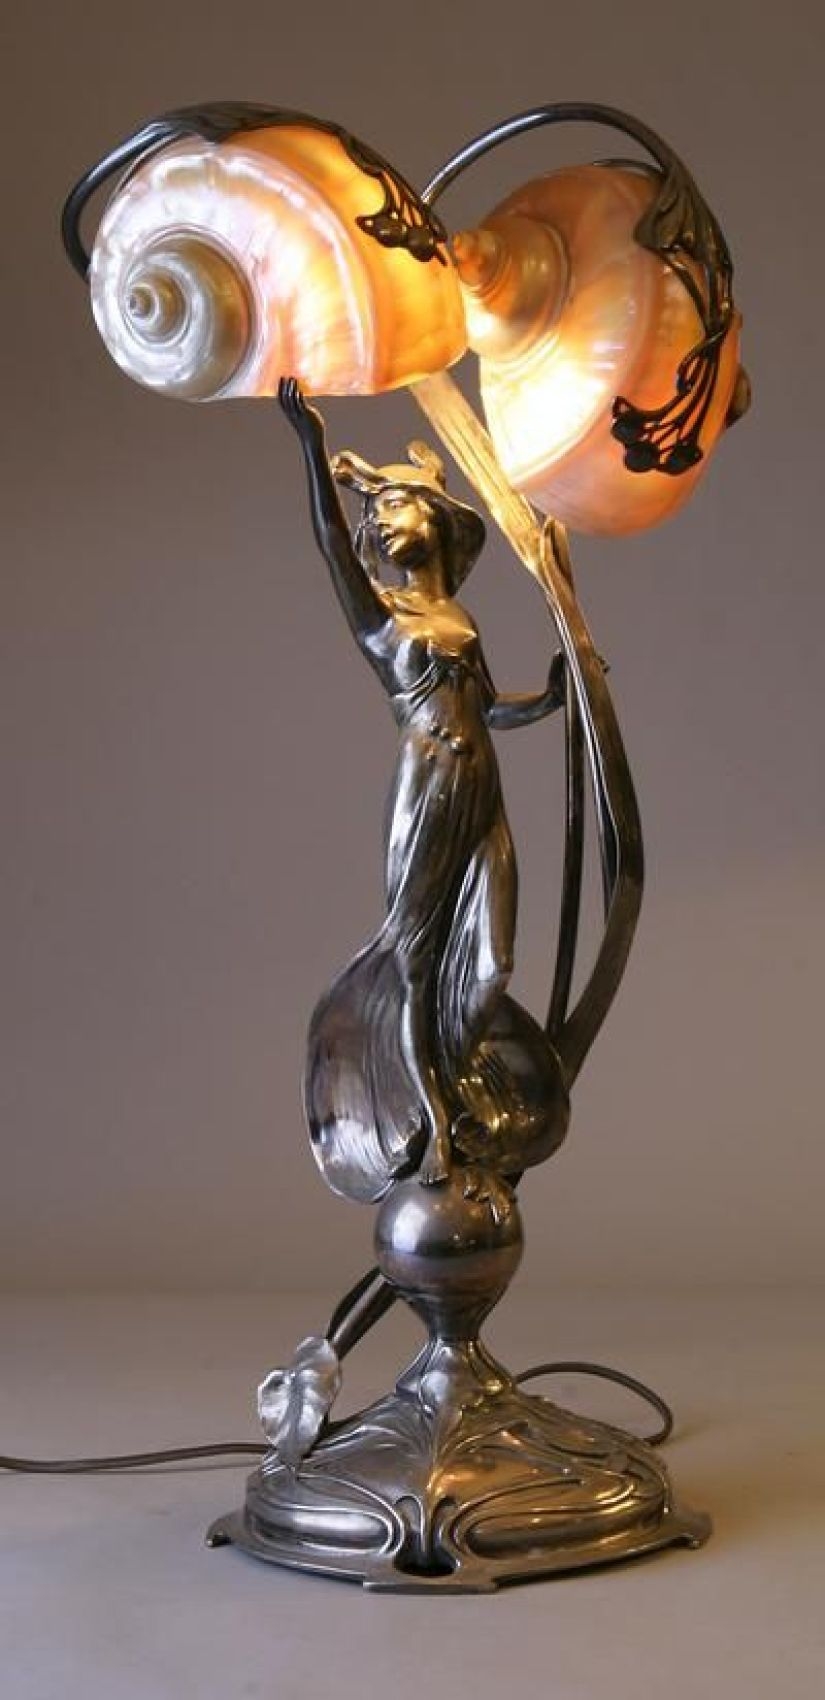 French art nouveau lady lamp